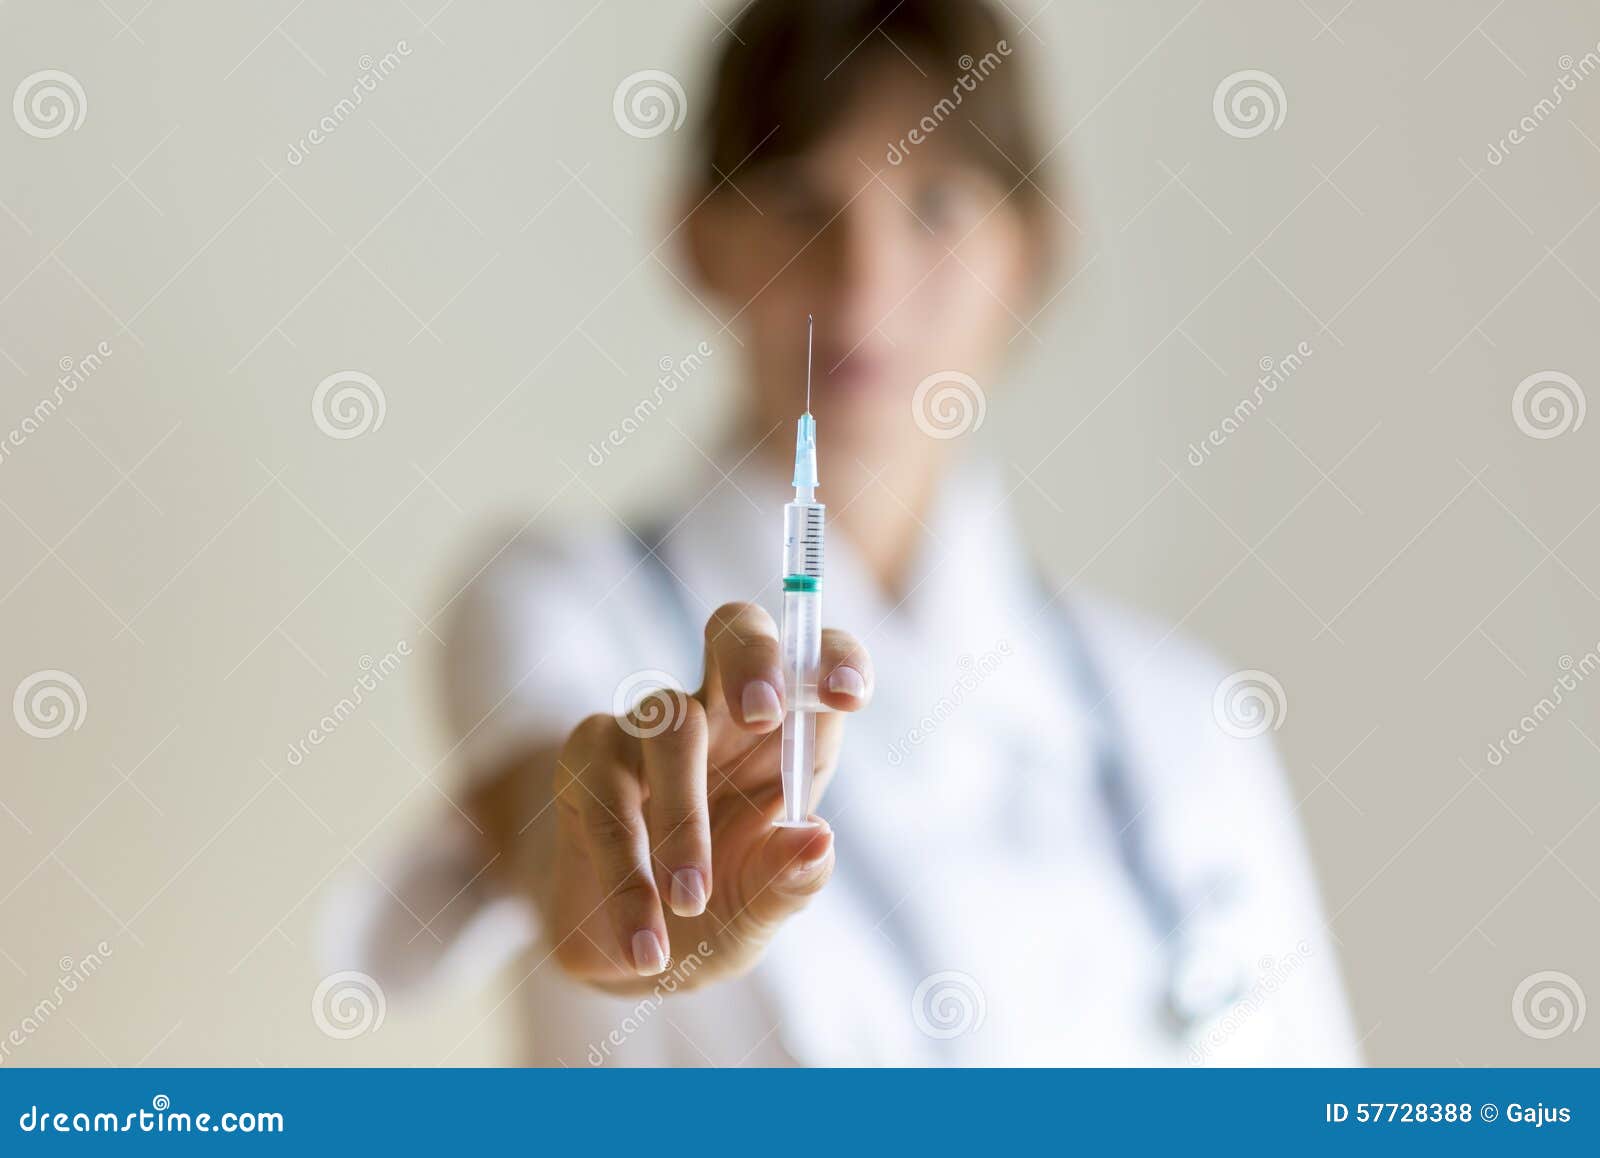 nurse holding an injection needle